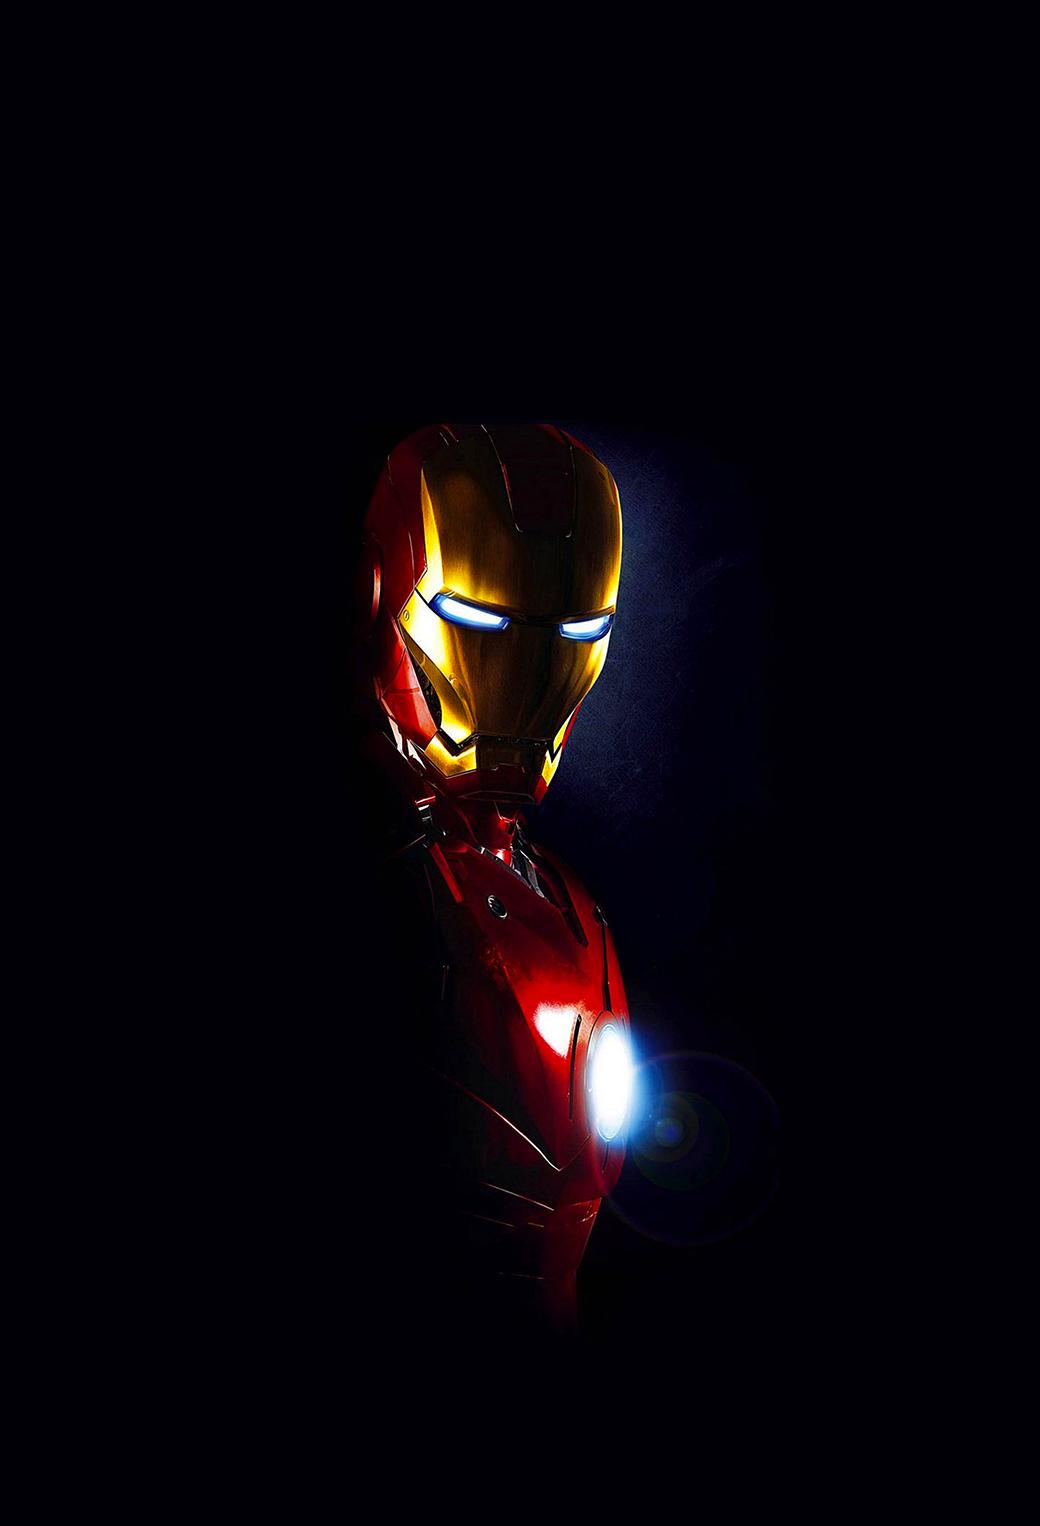 Iron Man in Dark Wallpaper for iPhone X, 6